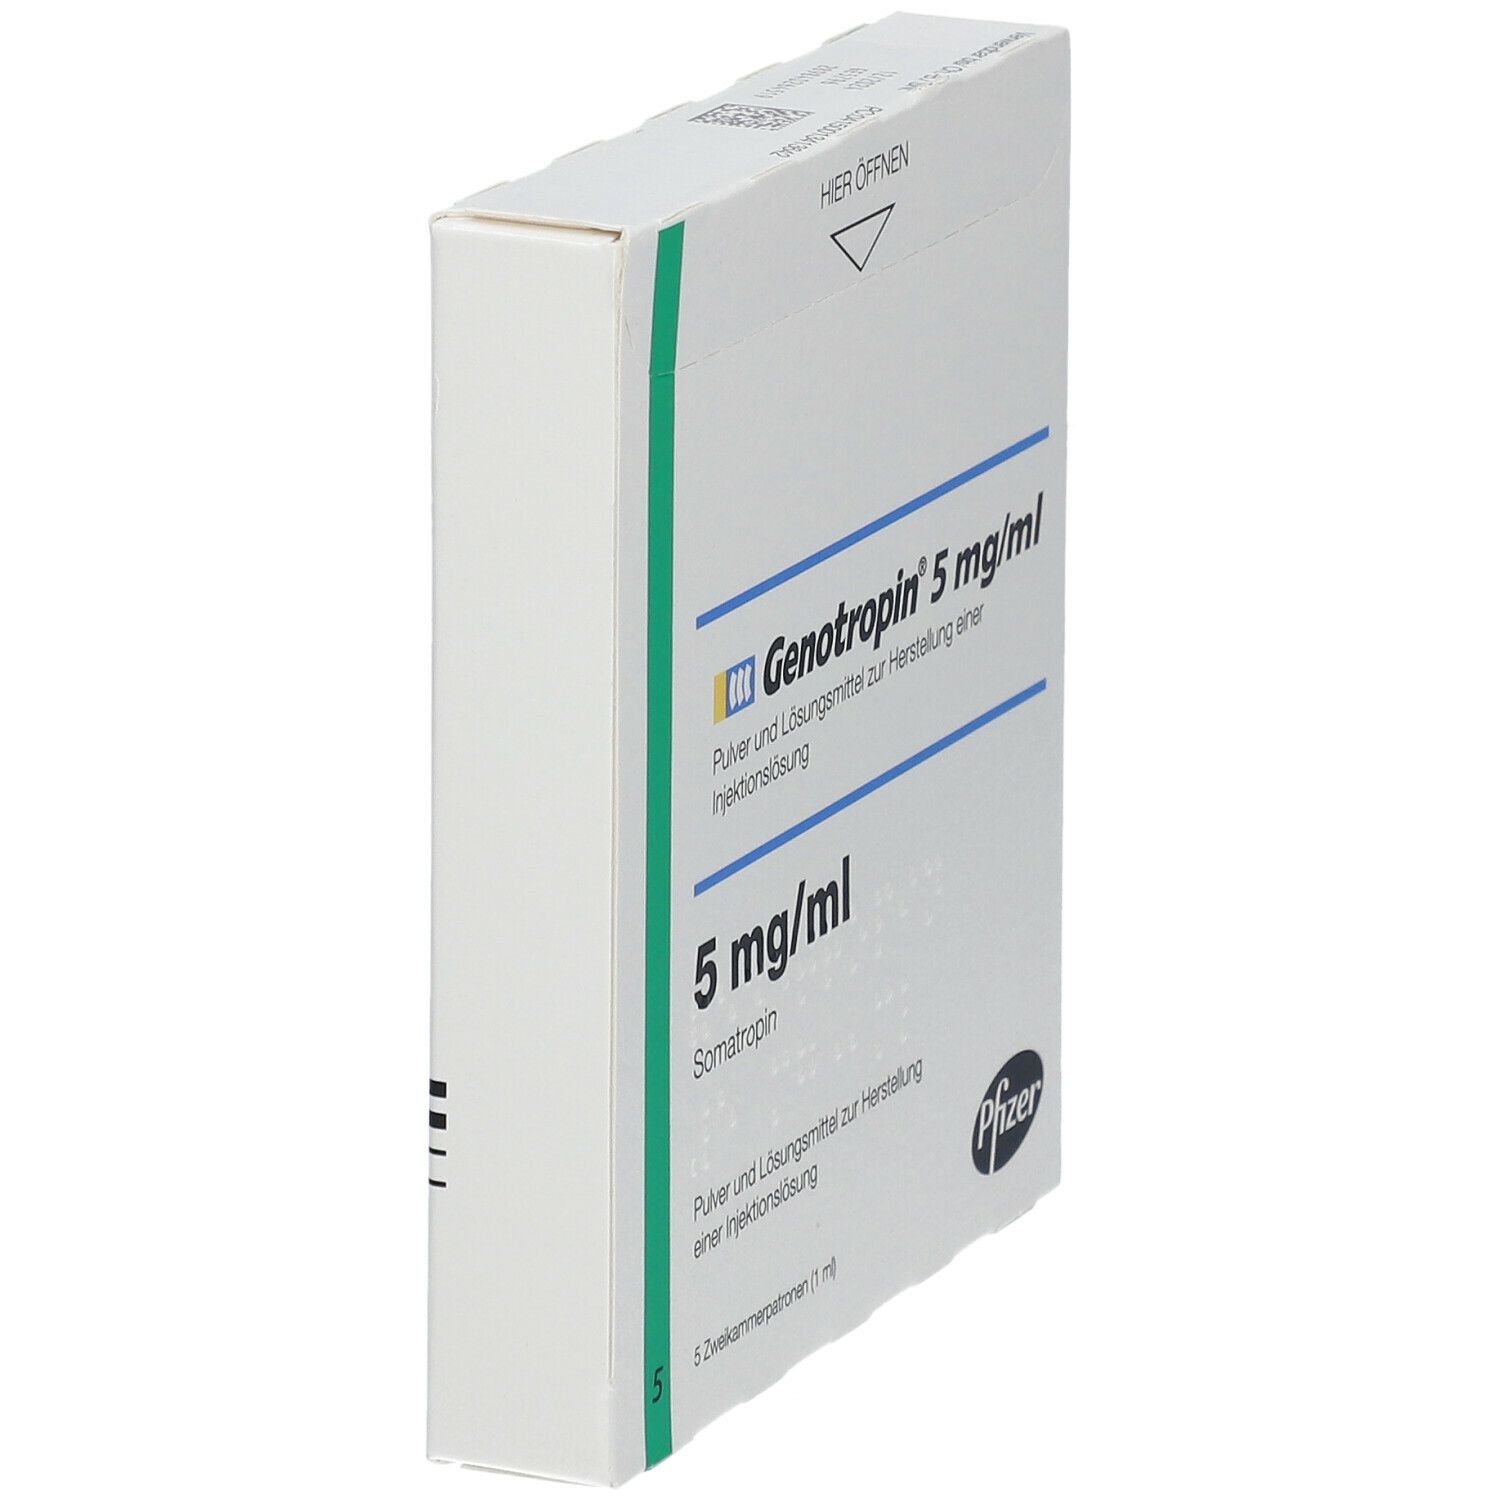 Genotropin® 5 mg/ml